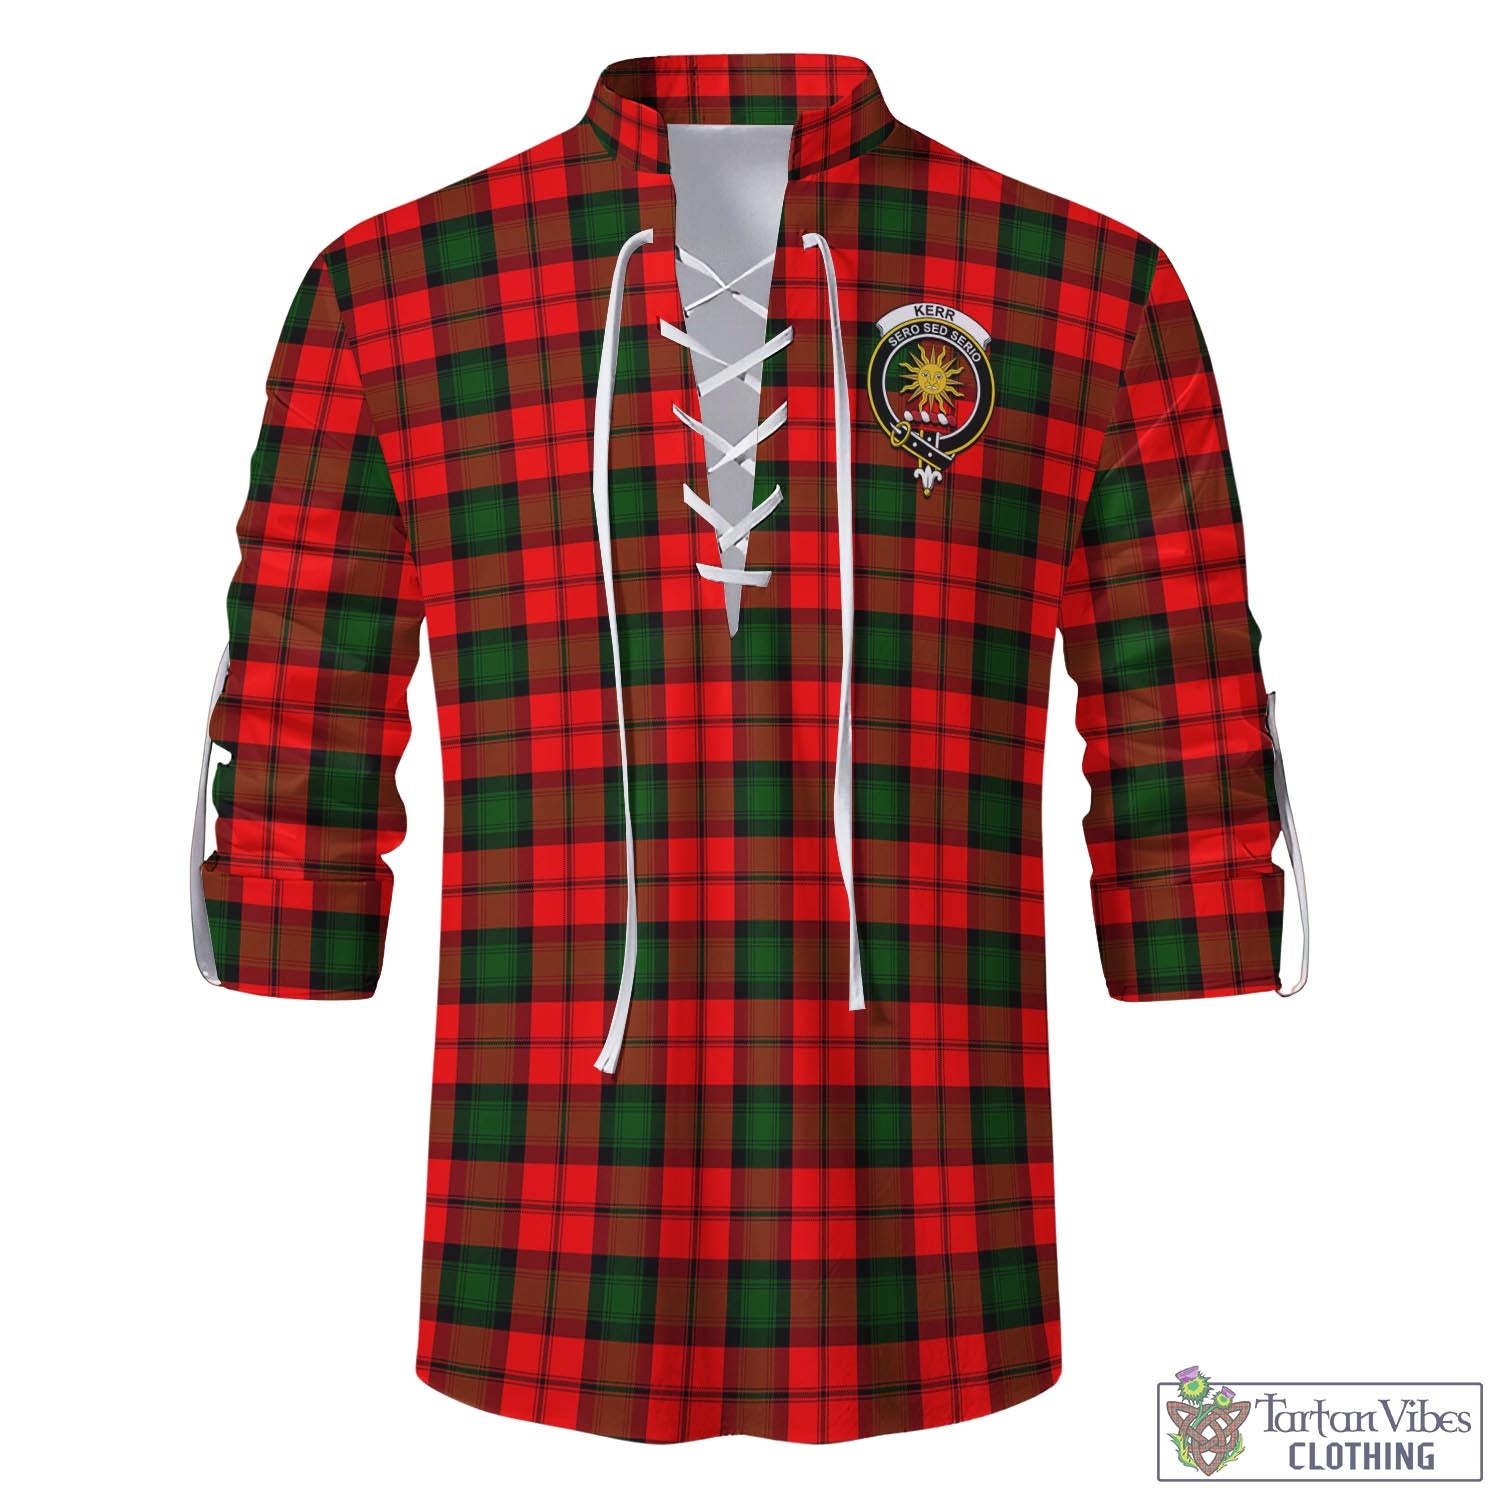 Tartan Vibes Clothing Kerr Modern Tartan Men's Scottish Traditional Jacobite Ghillie Kilt Shirt with Family Crest